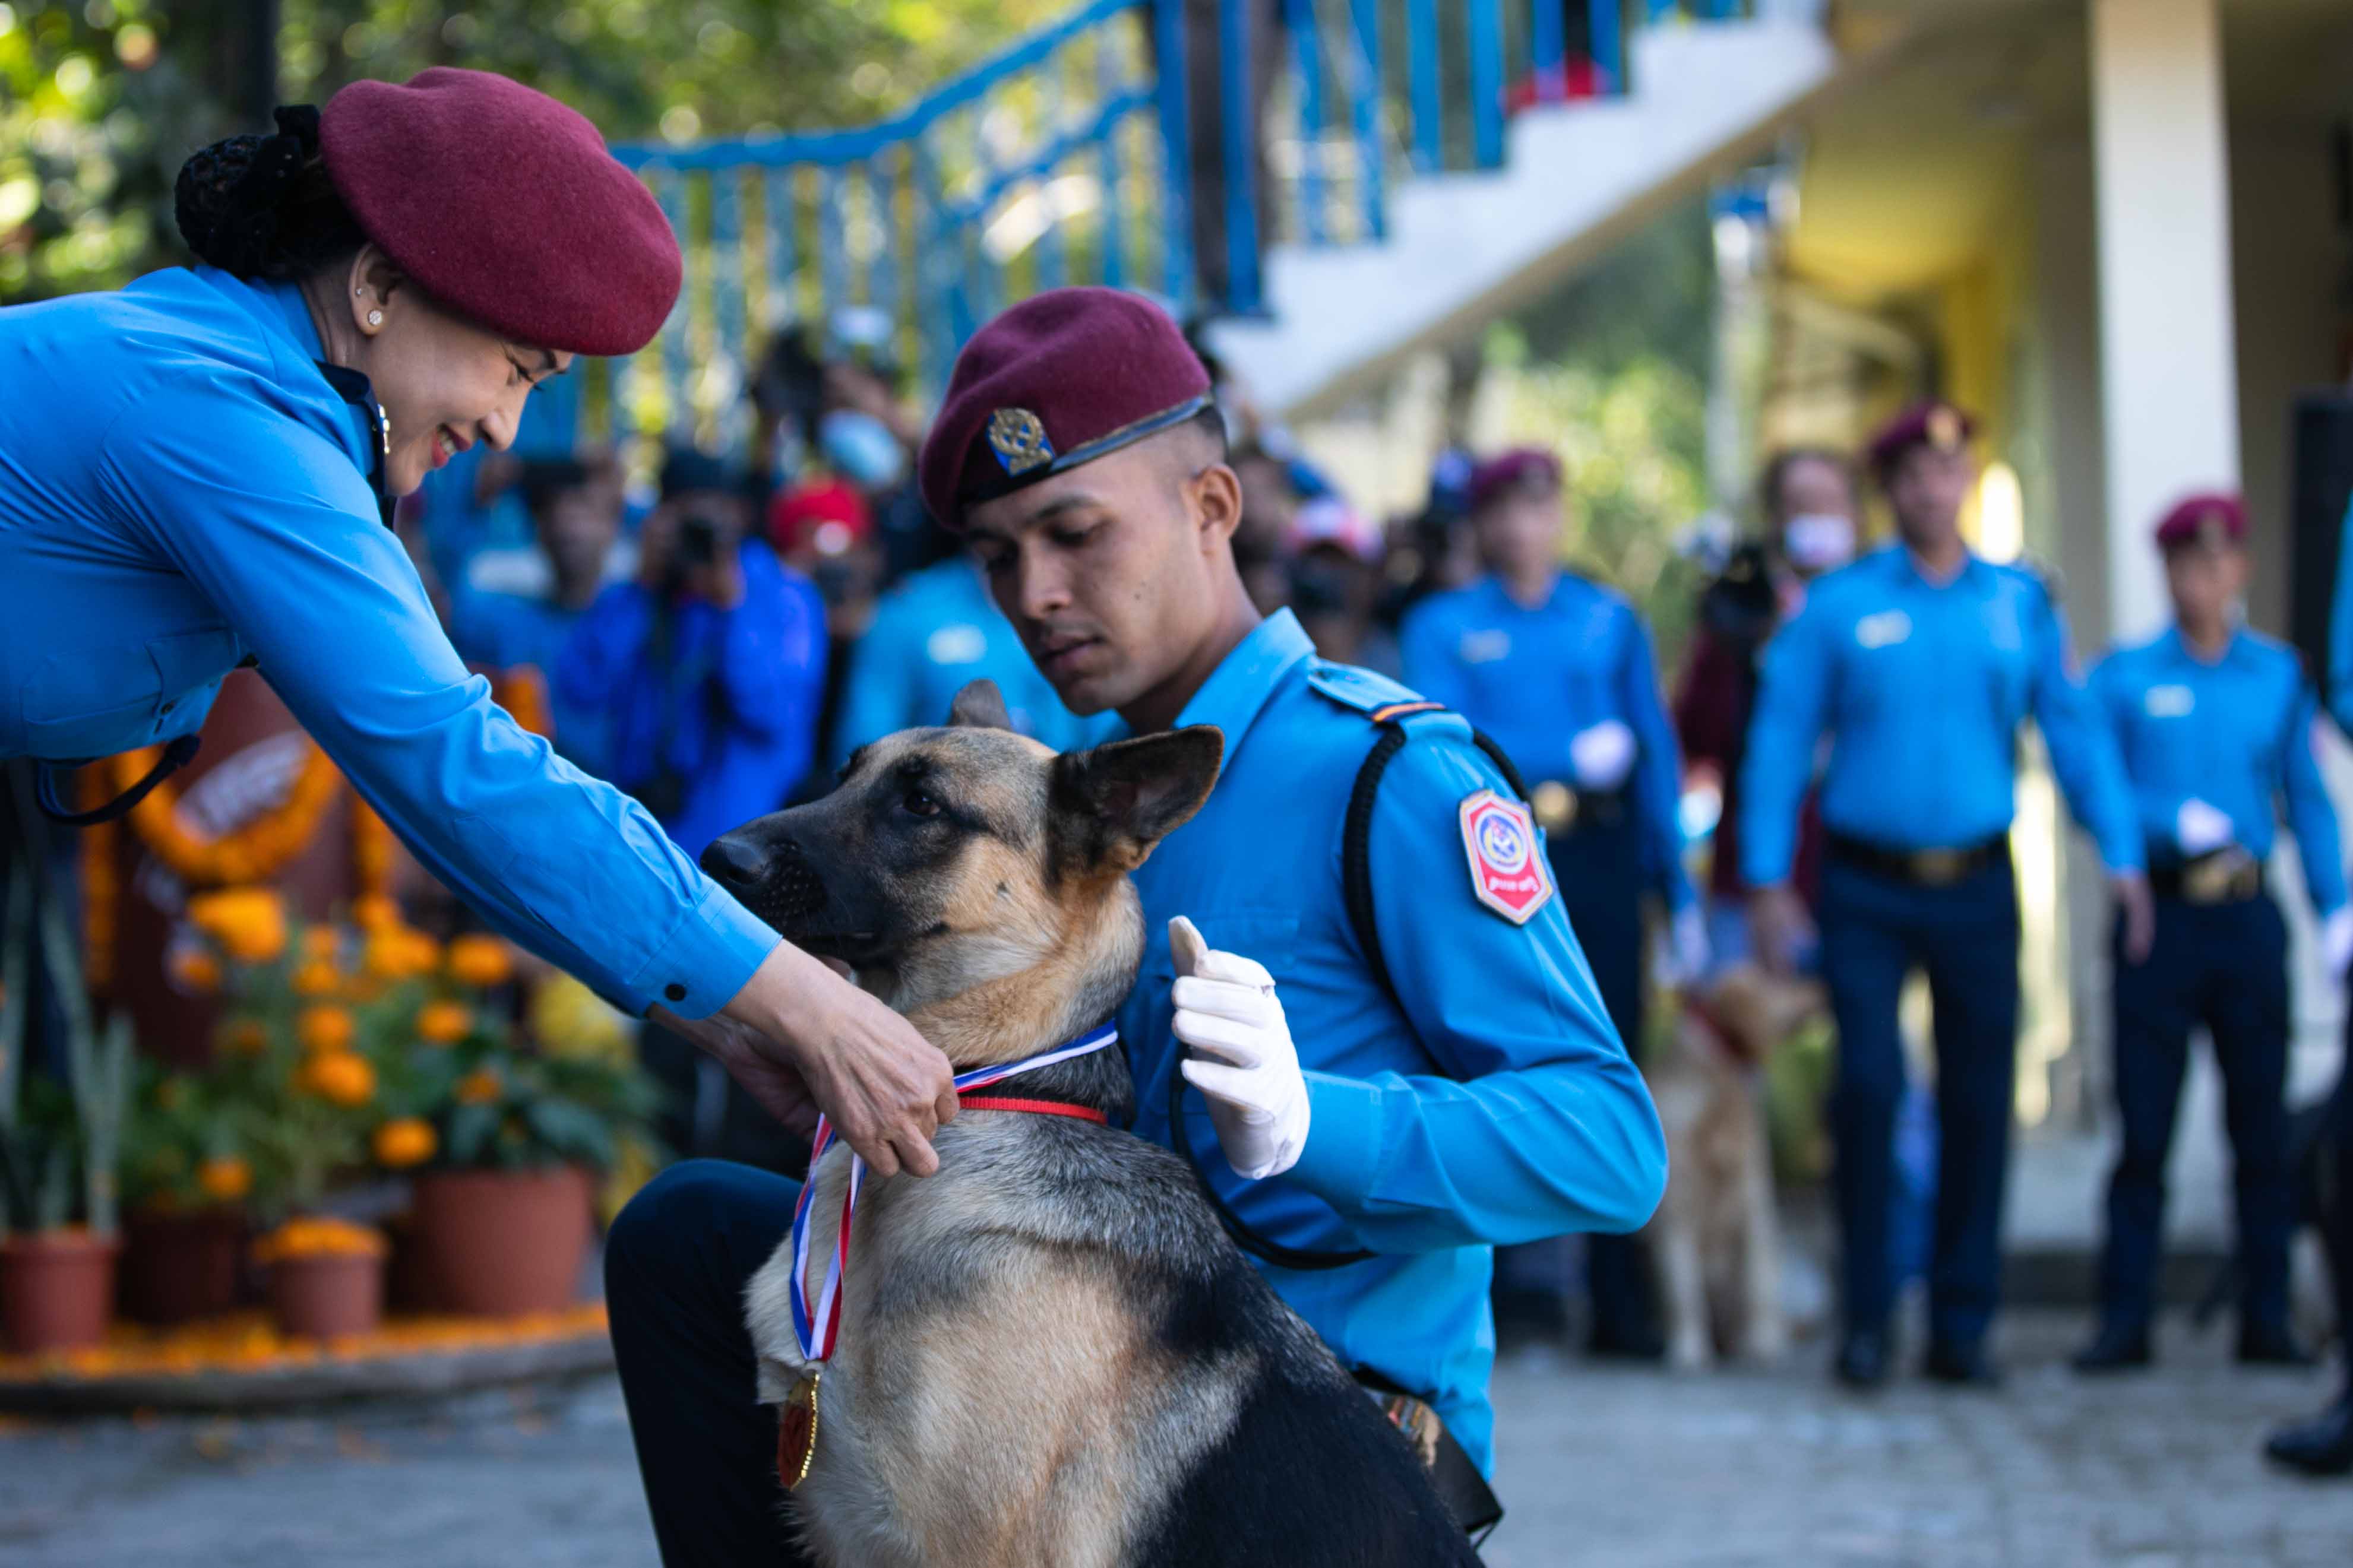 Nepal police dog festival-Nepal Photo Library  (14)1666603851.JPG